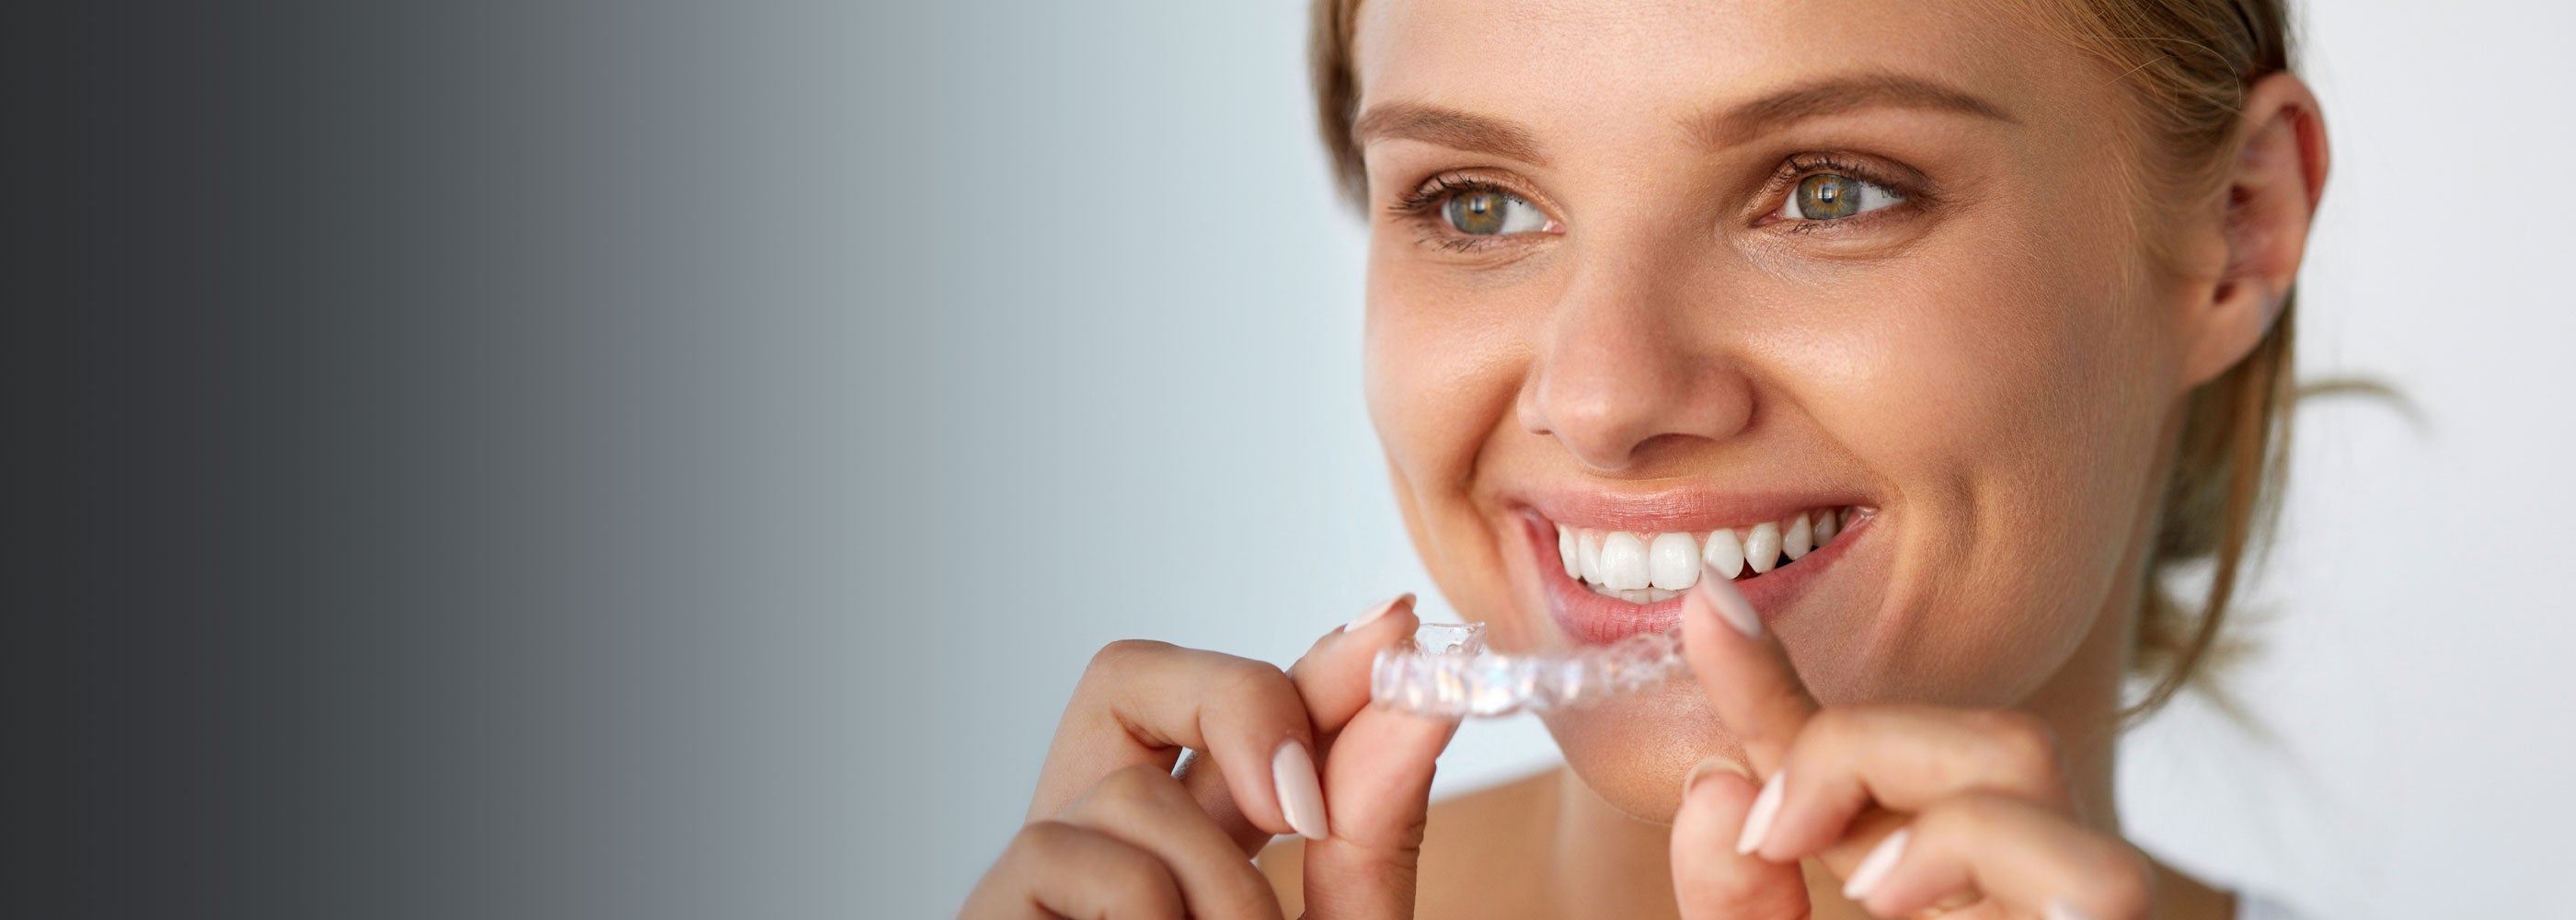 Orthodontic patient with orthodontic aligners